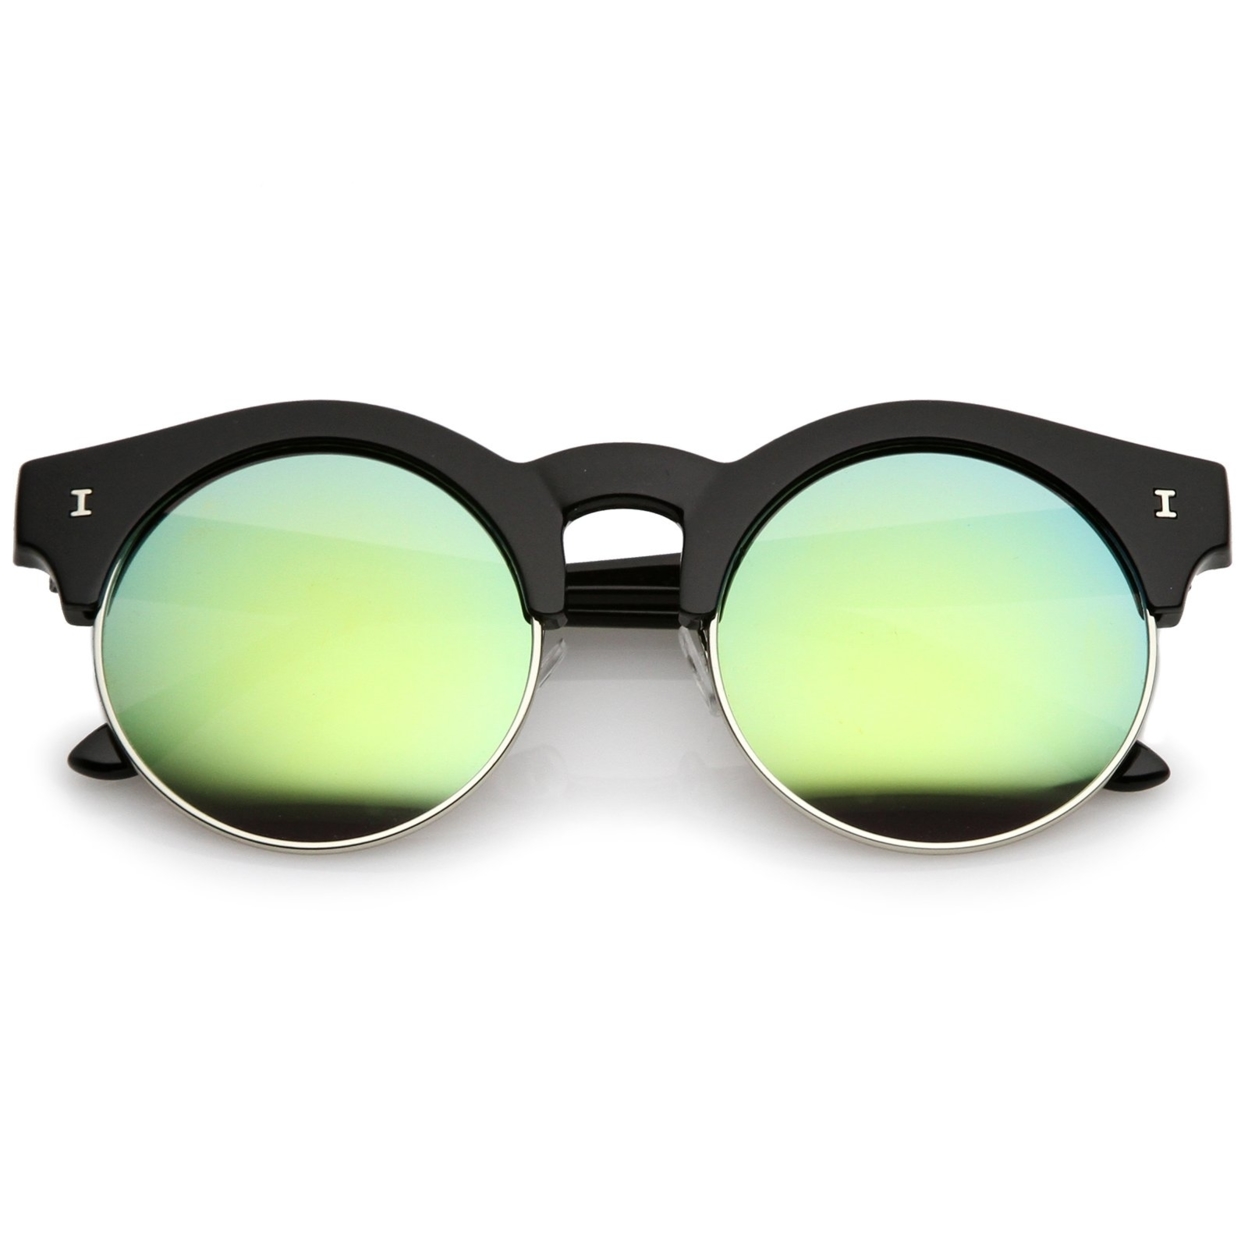 Modern Metal Trim Colored Mirror Round Flat Lens Half Frame Sunglasses 51mm - Tortoise-Gold / Blue Mirror